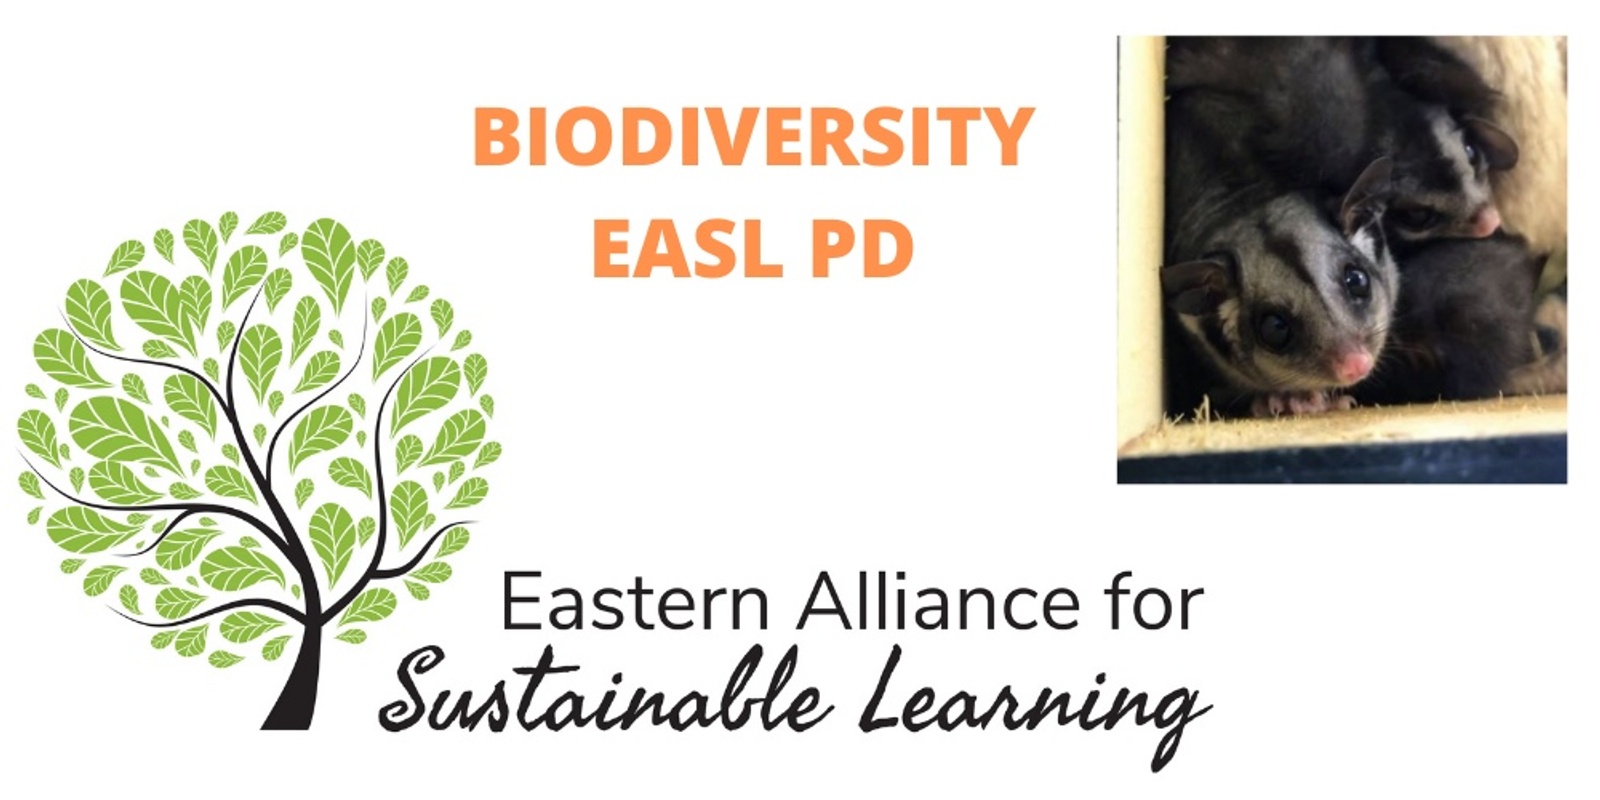 Banner image for Biodiversity |EASL Term 4 PD